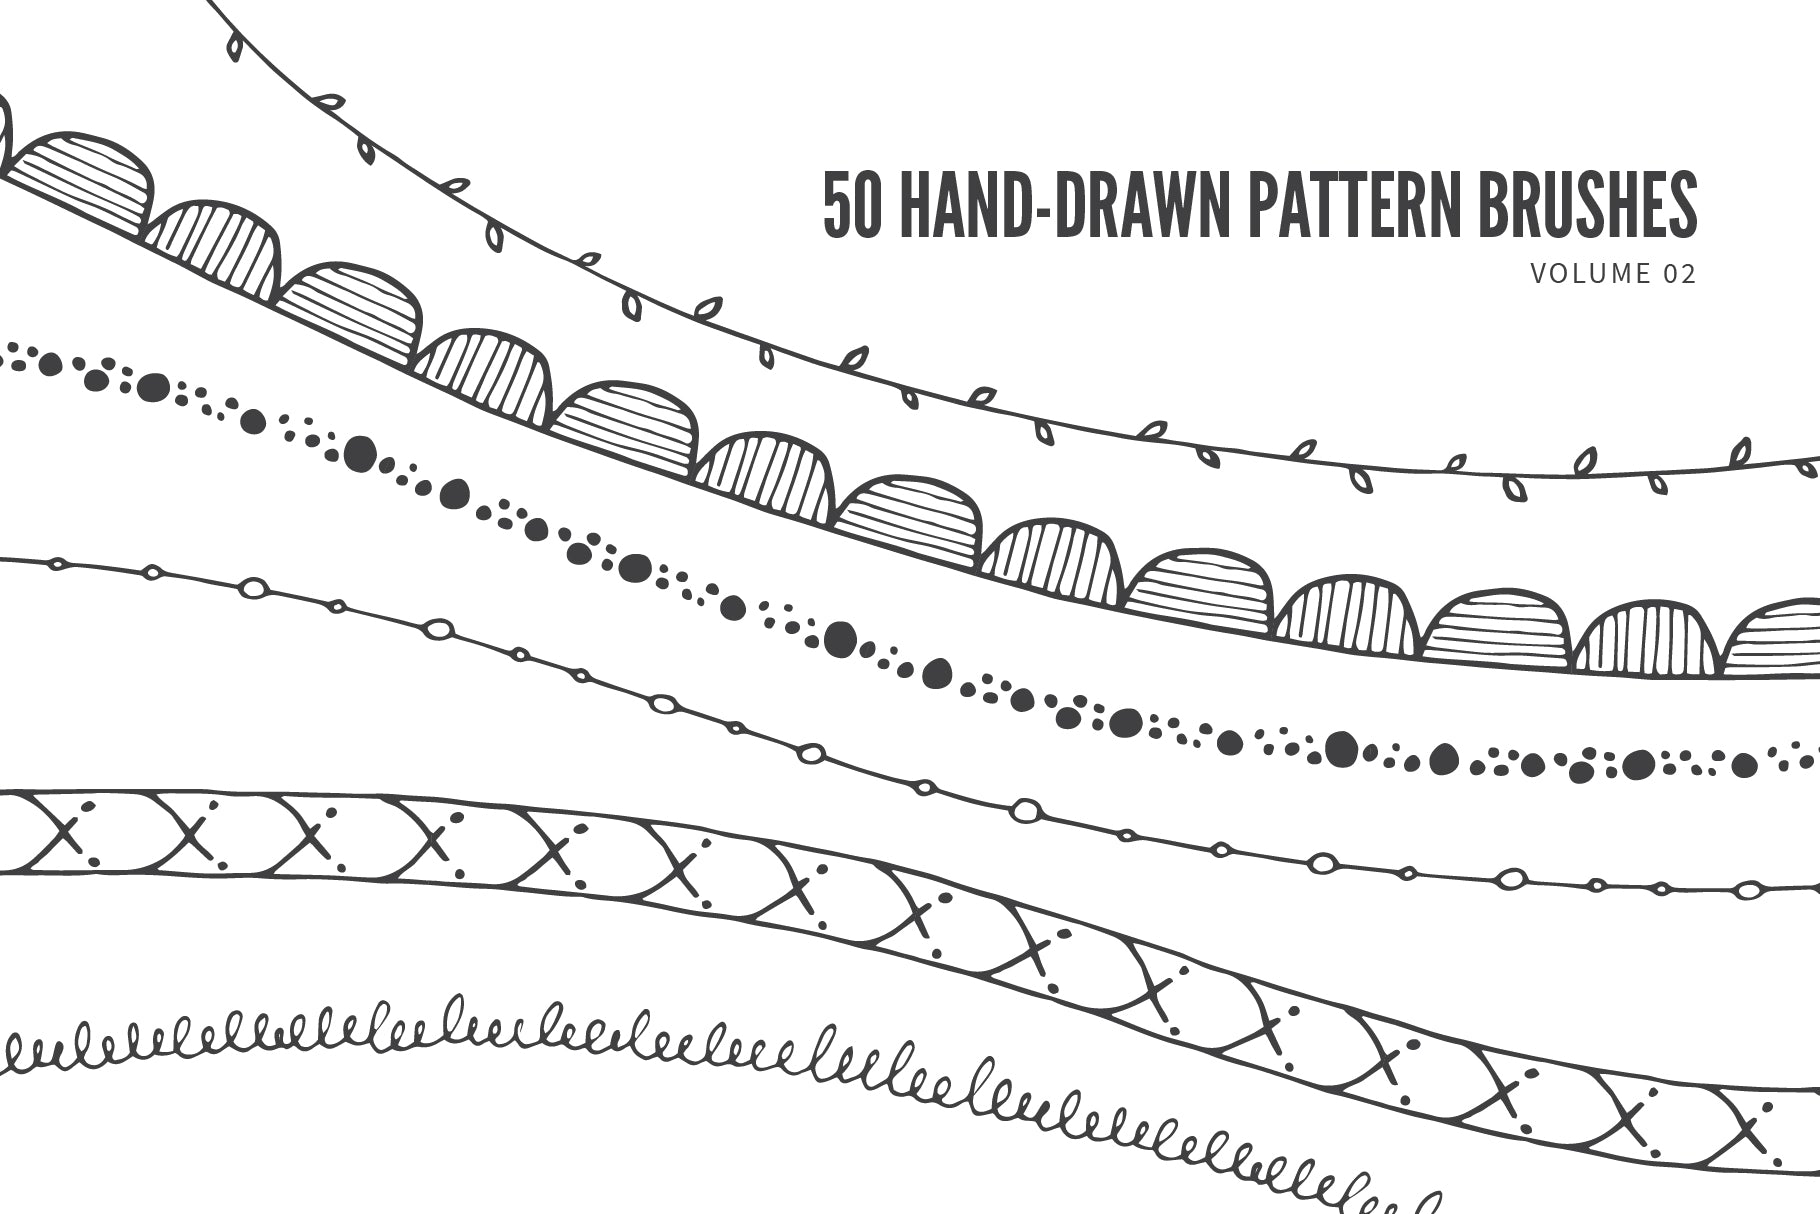 Hand Drawn Vector Pattern Brushes Bundle 01 Geometric Abstract Tribal Boho Floral Botanical Foliage